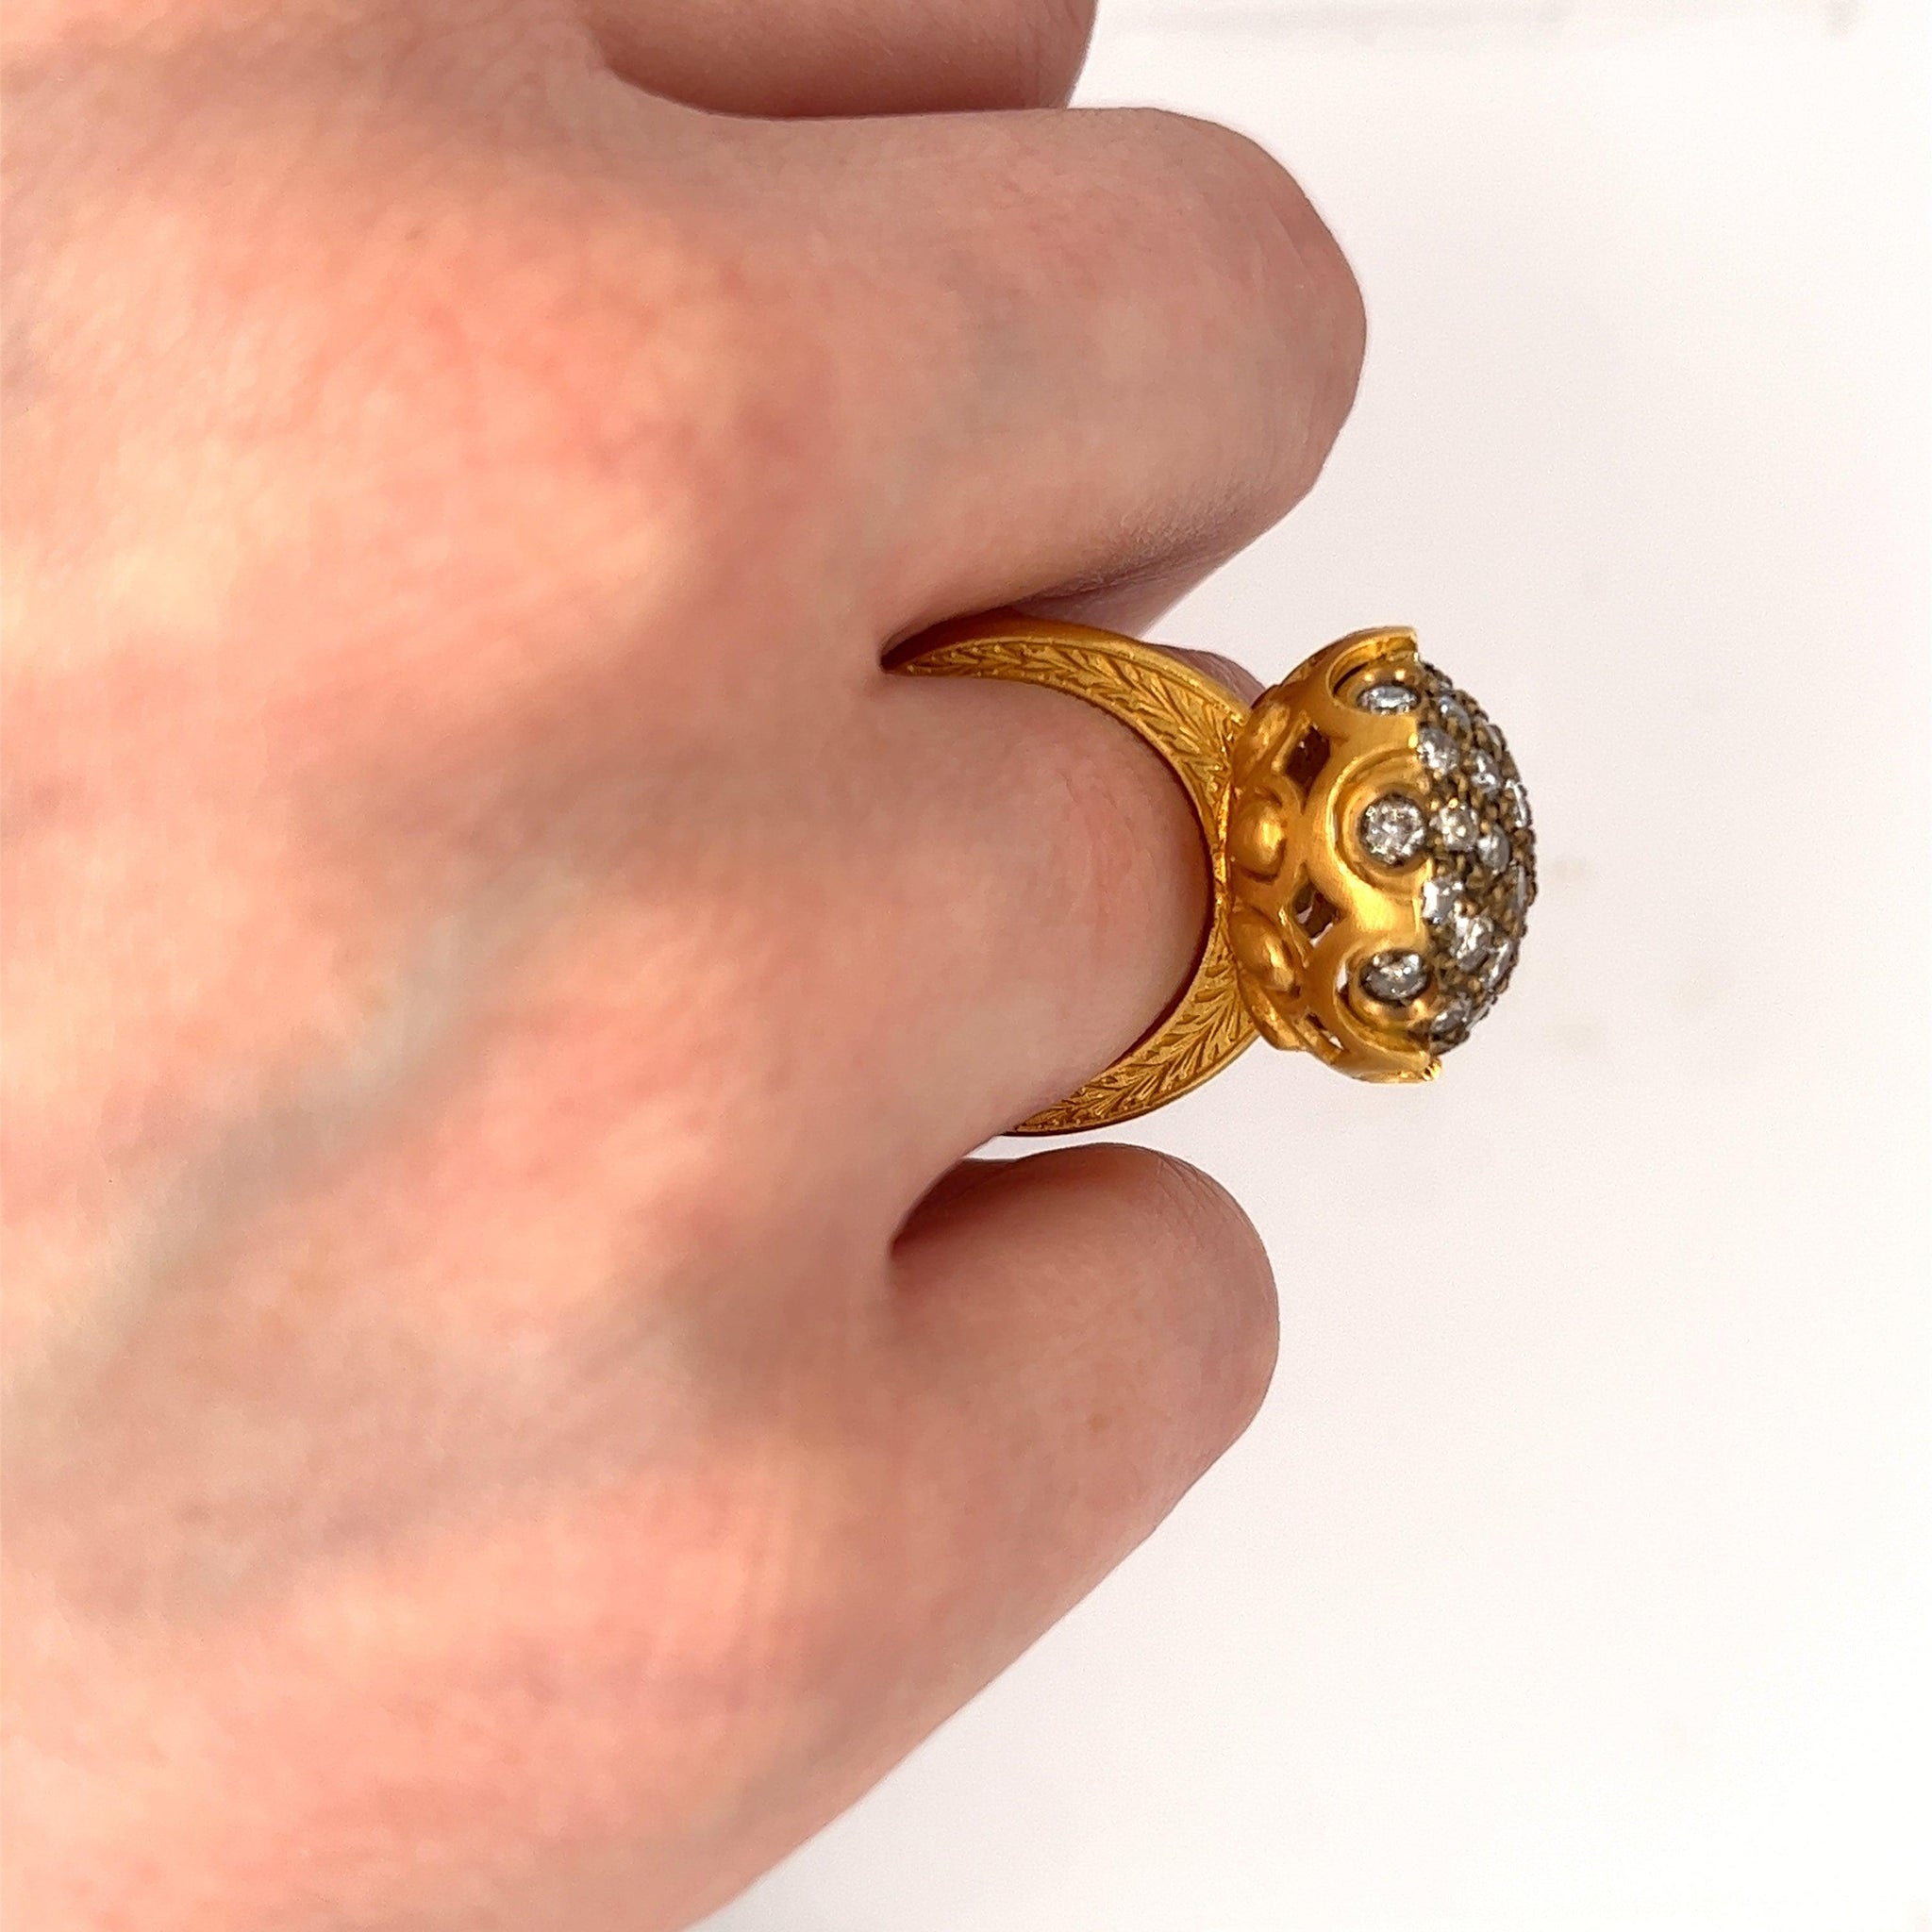 Aakrit Men's Ring - Buy Certified Gold & Diamond Rings Online |  KuberBox.com - KuberBox.com